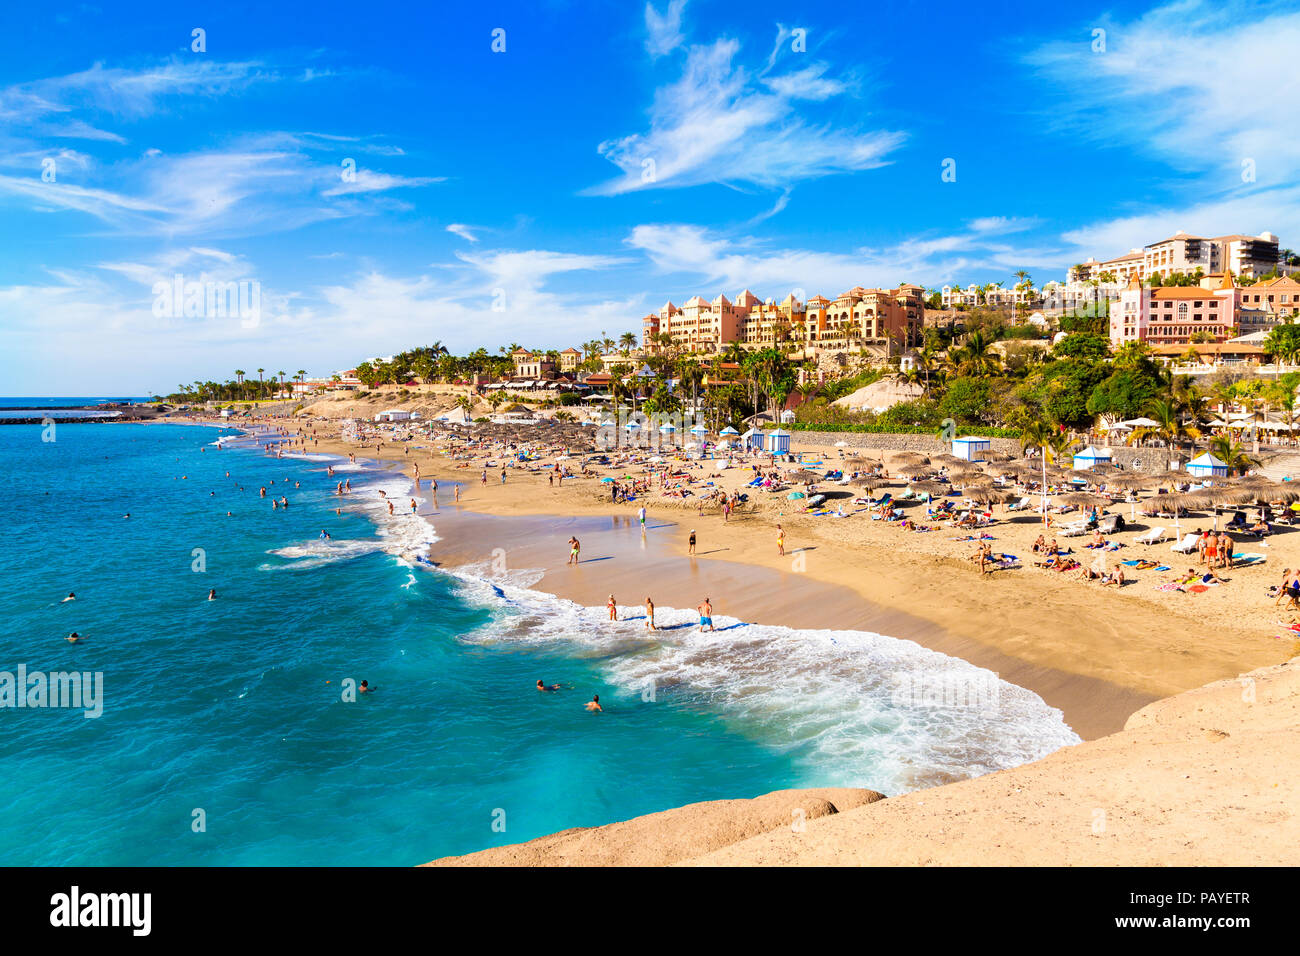 Summer Holiday On El Duque Beach In Tenerife Famous Adeje Coast On Canary Island Spain Stock Photo Alamy